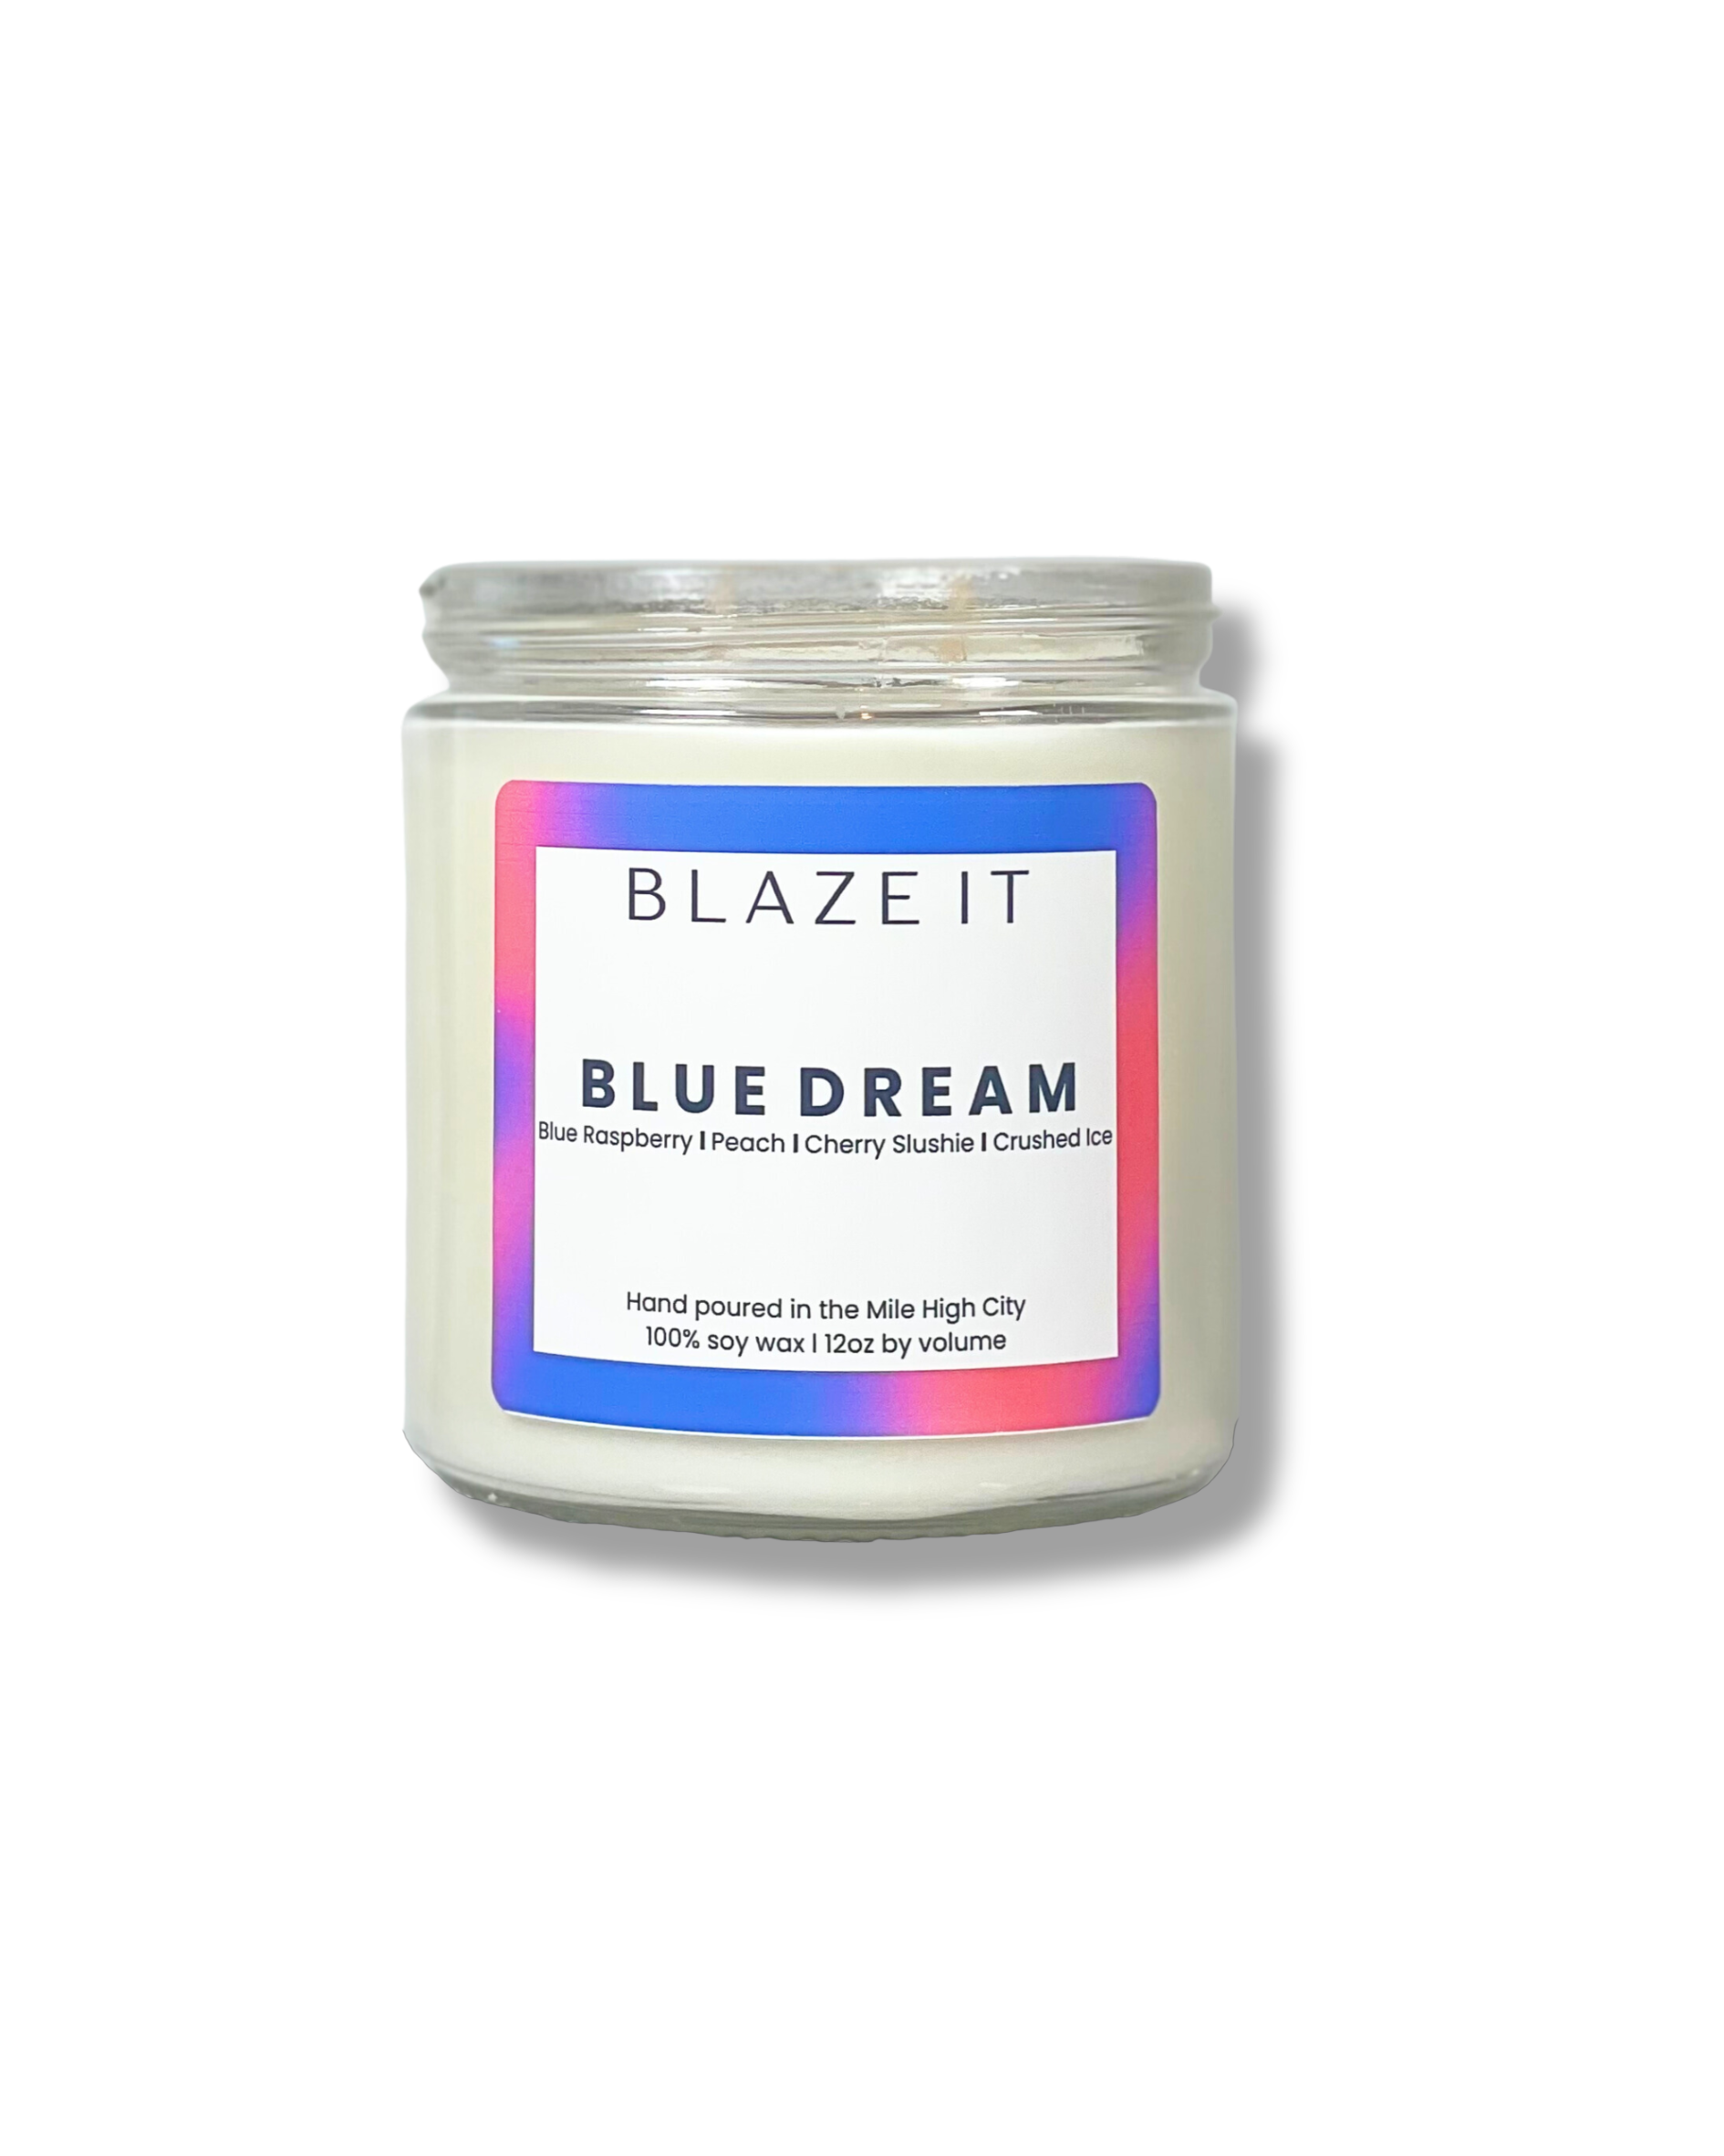 Blue Dream candle - Blaze it Candle co